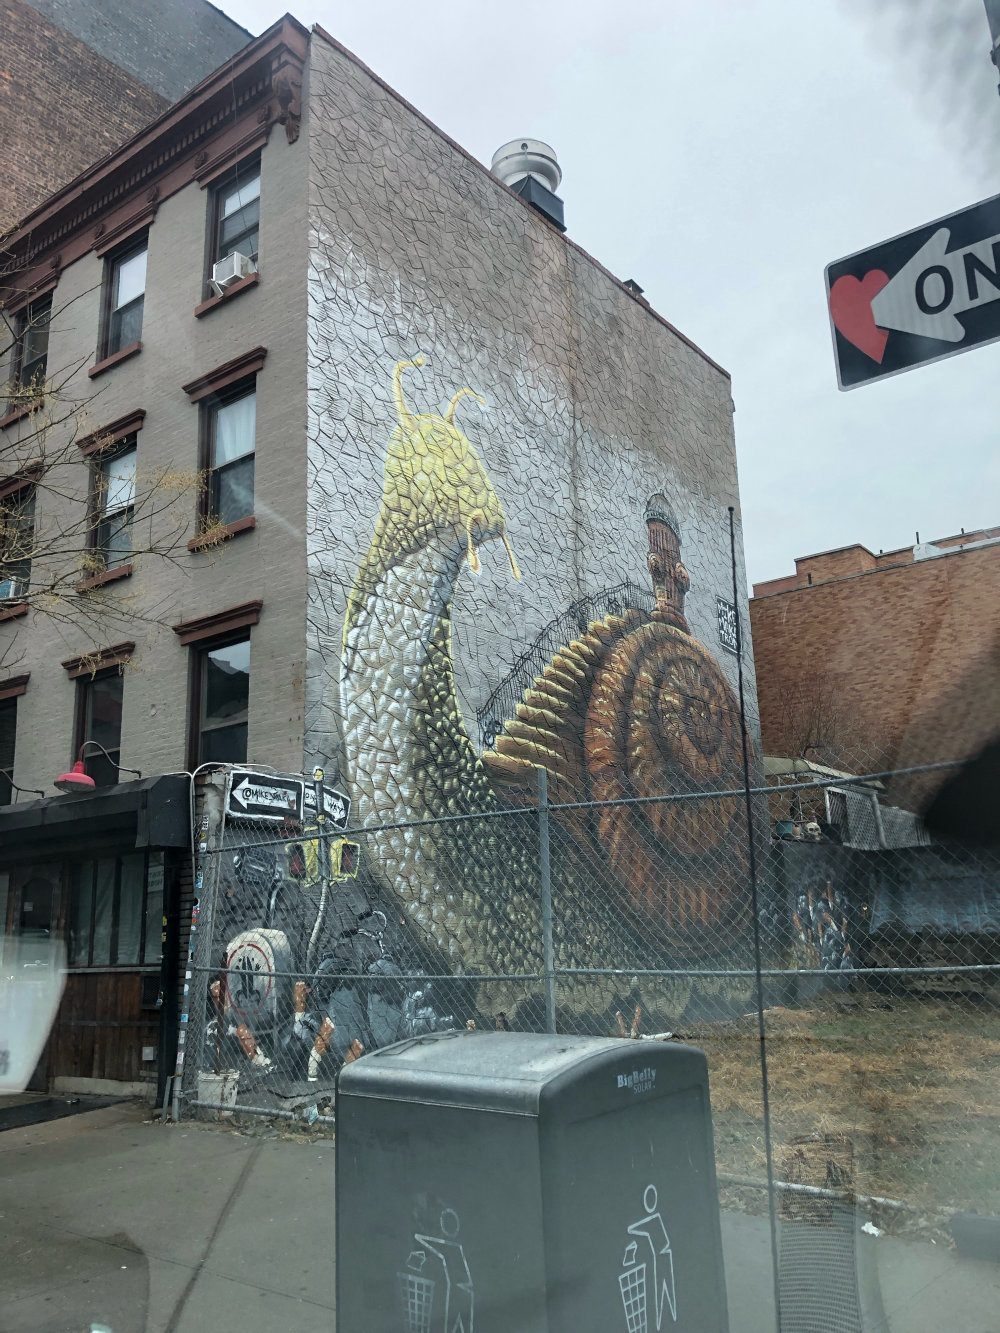 mural in Brooklyn by artist Mike Makatron.